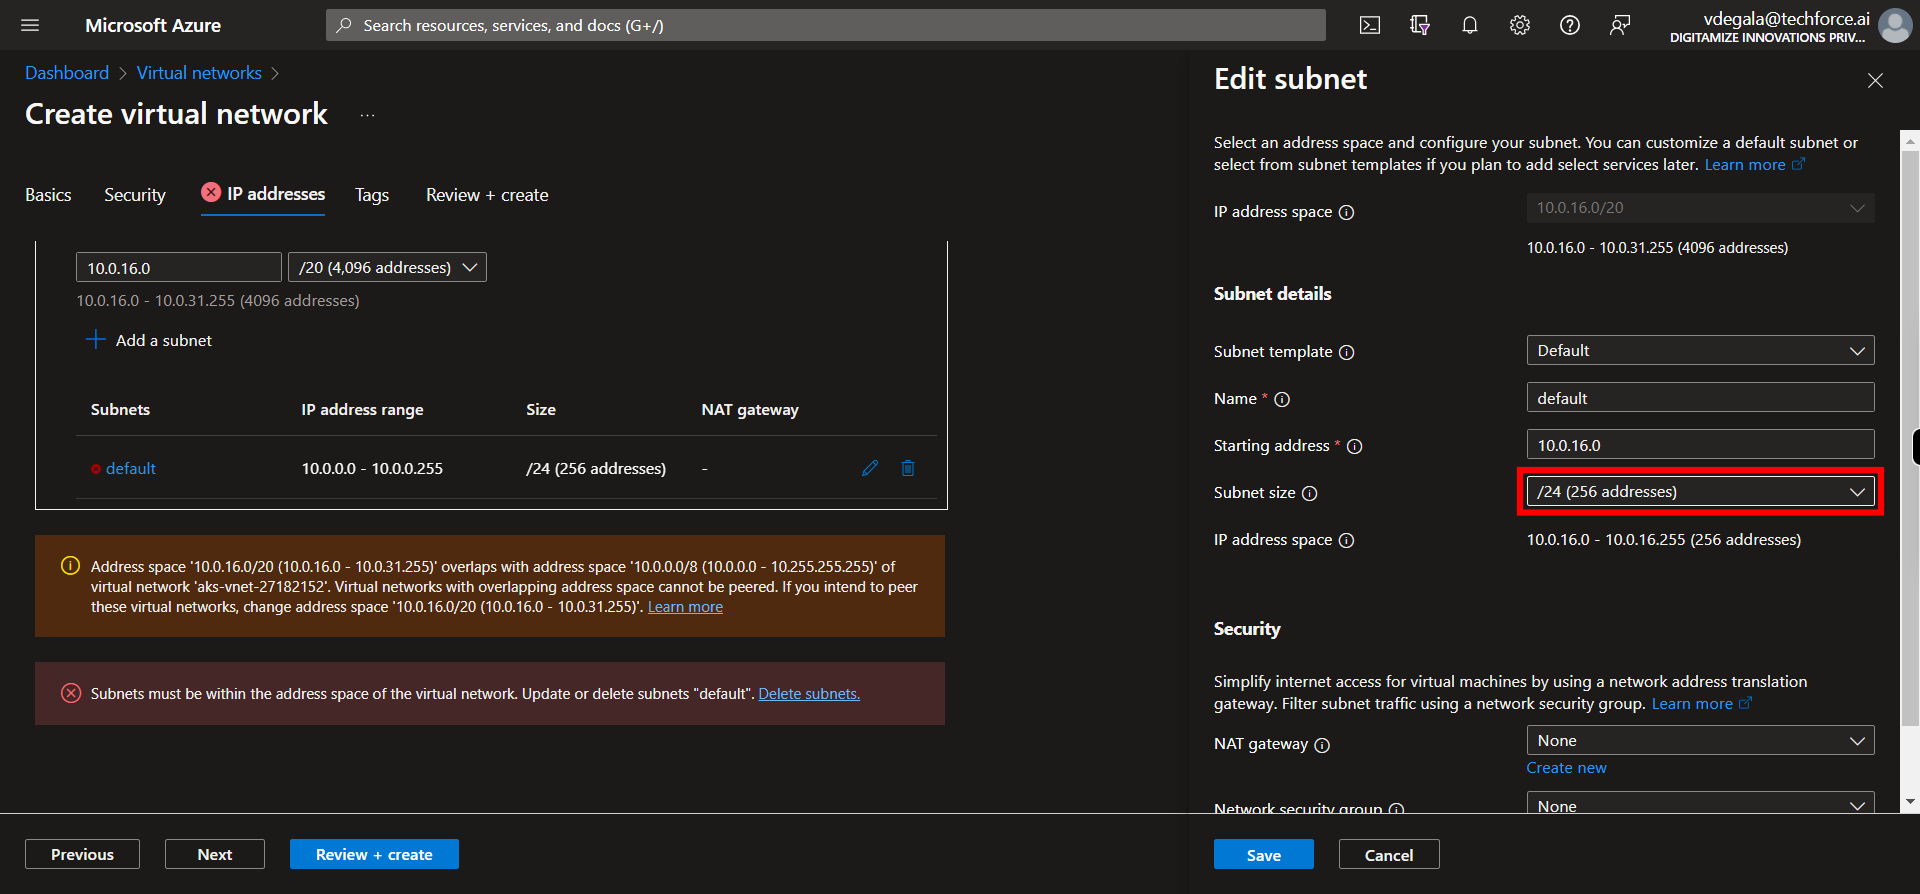 Edit subnet - Microsoft Azure